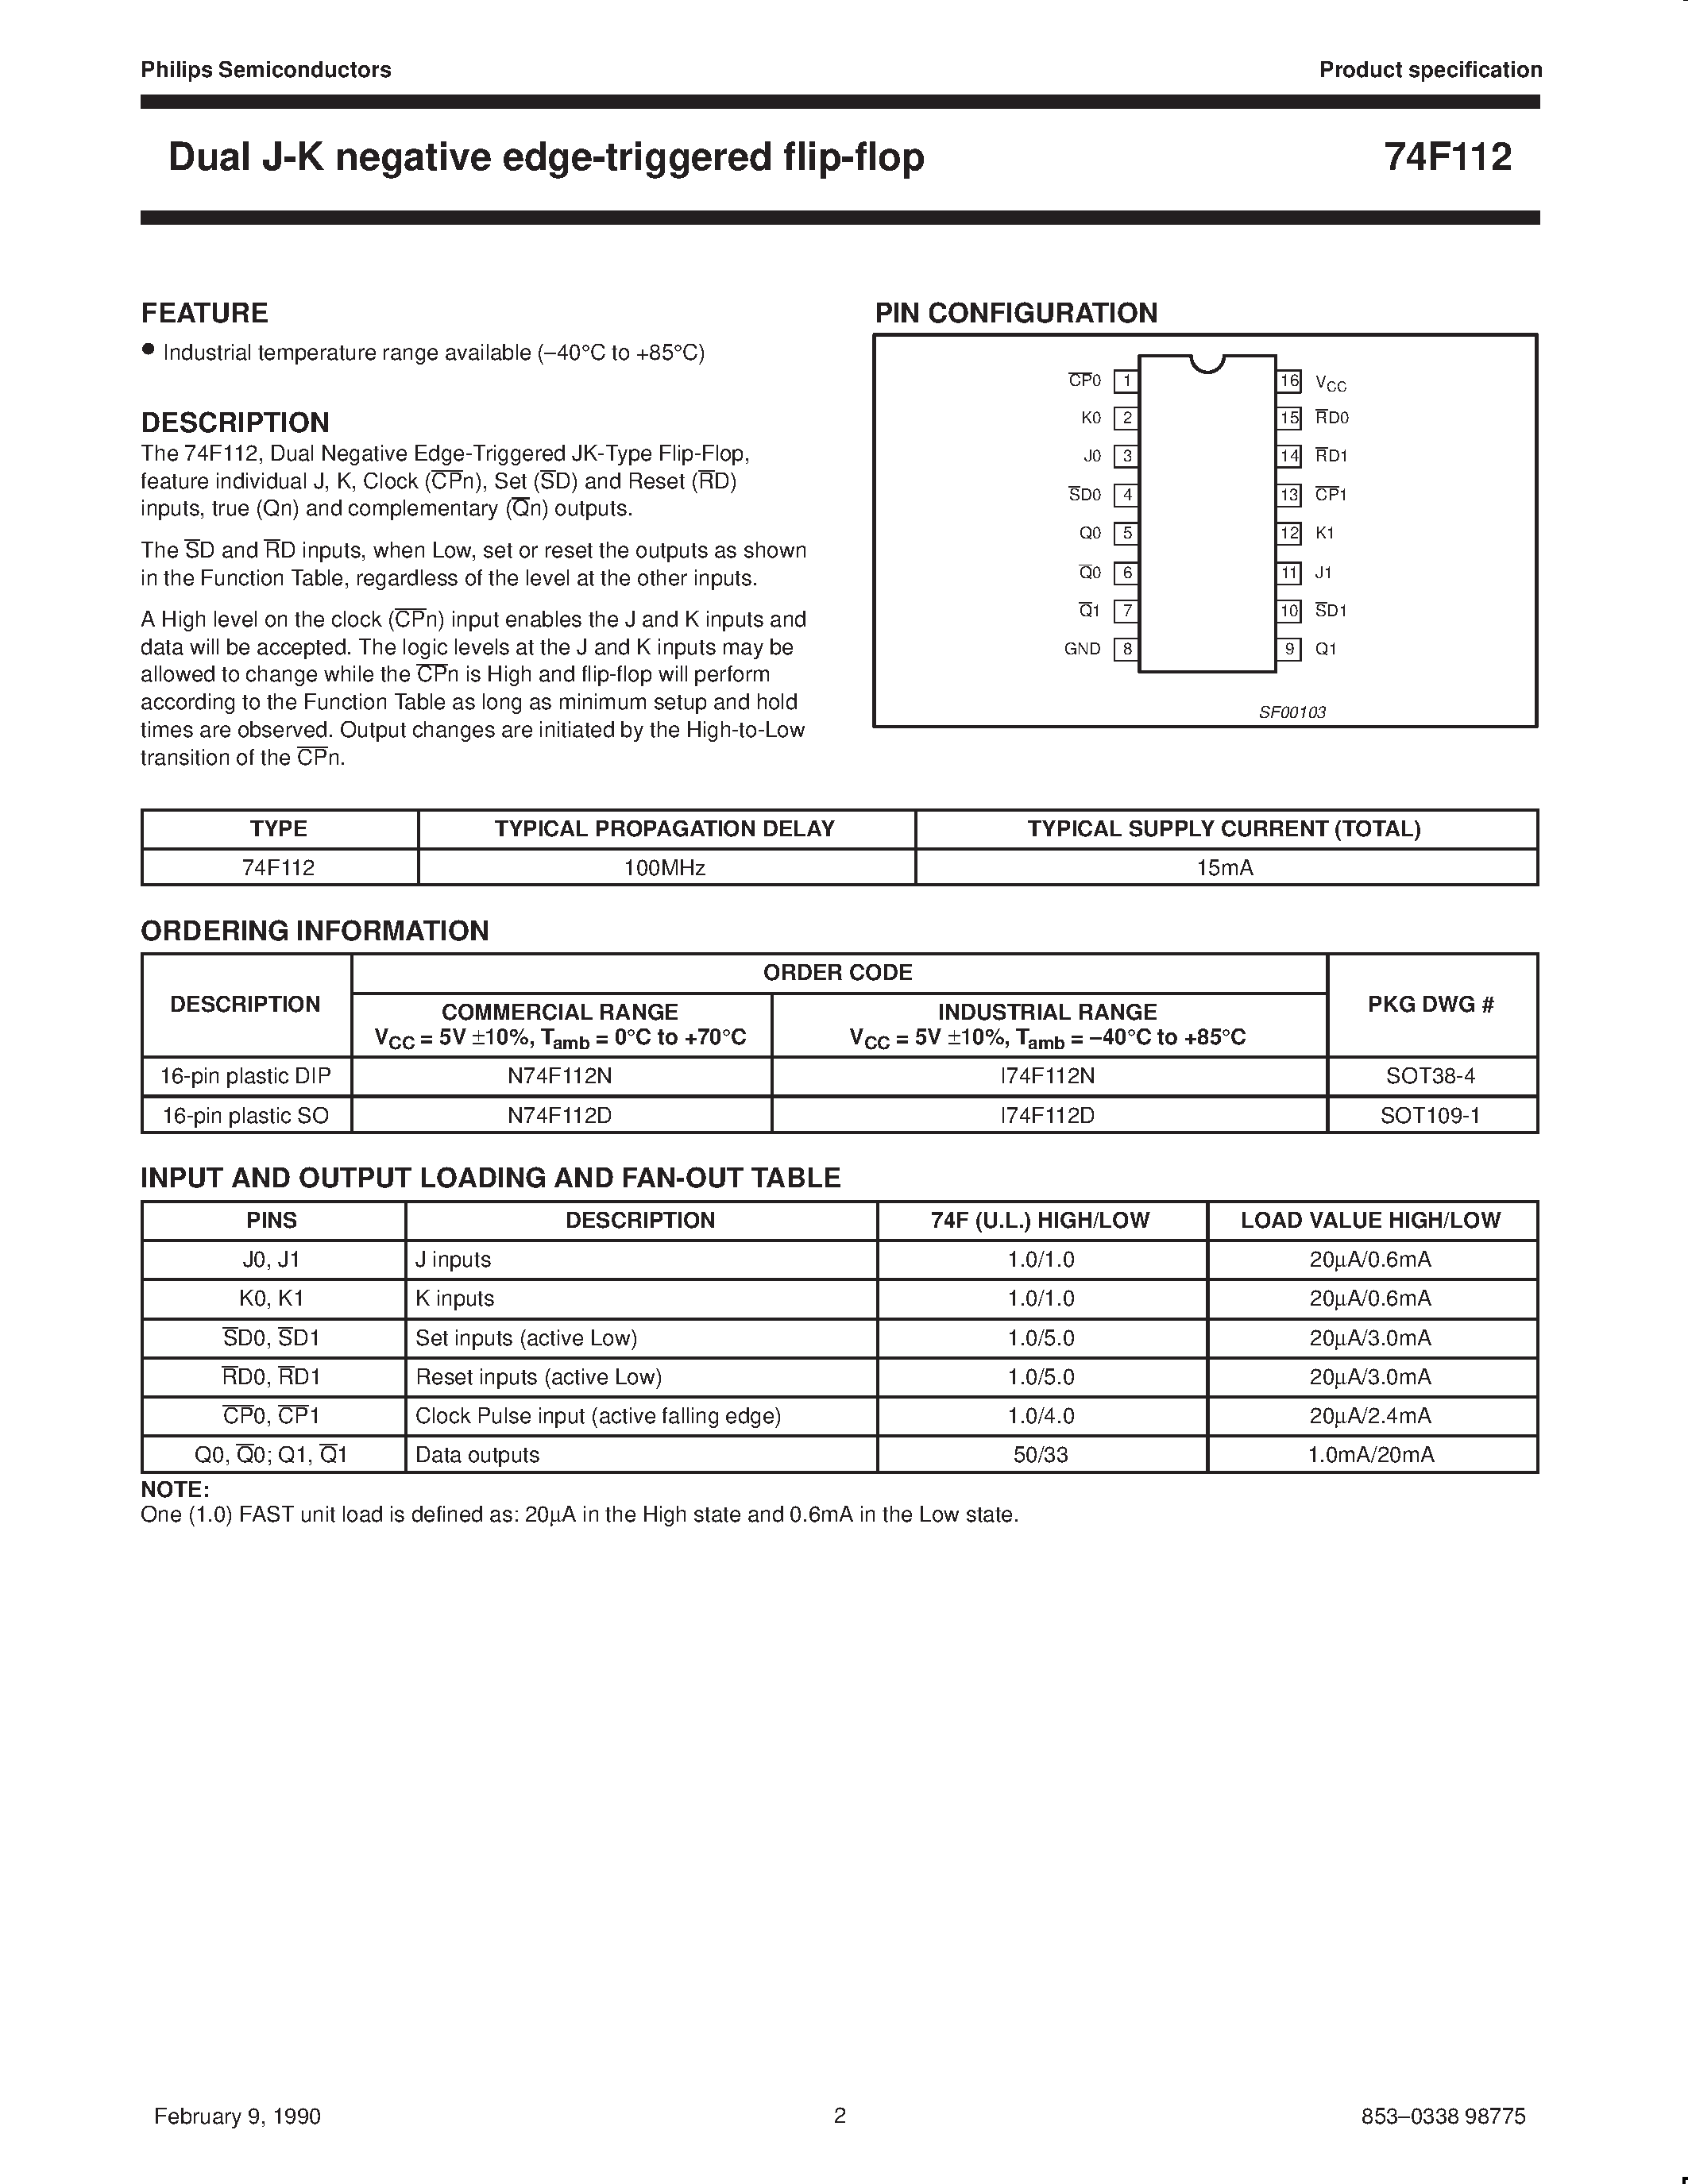 Datasheet N74F112D - Dual J-K negative edge-triggered flip-flop page 2